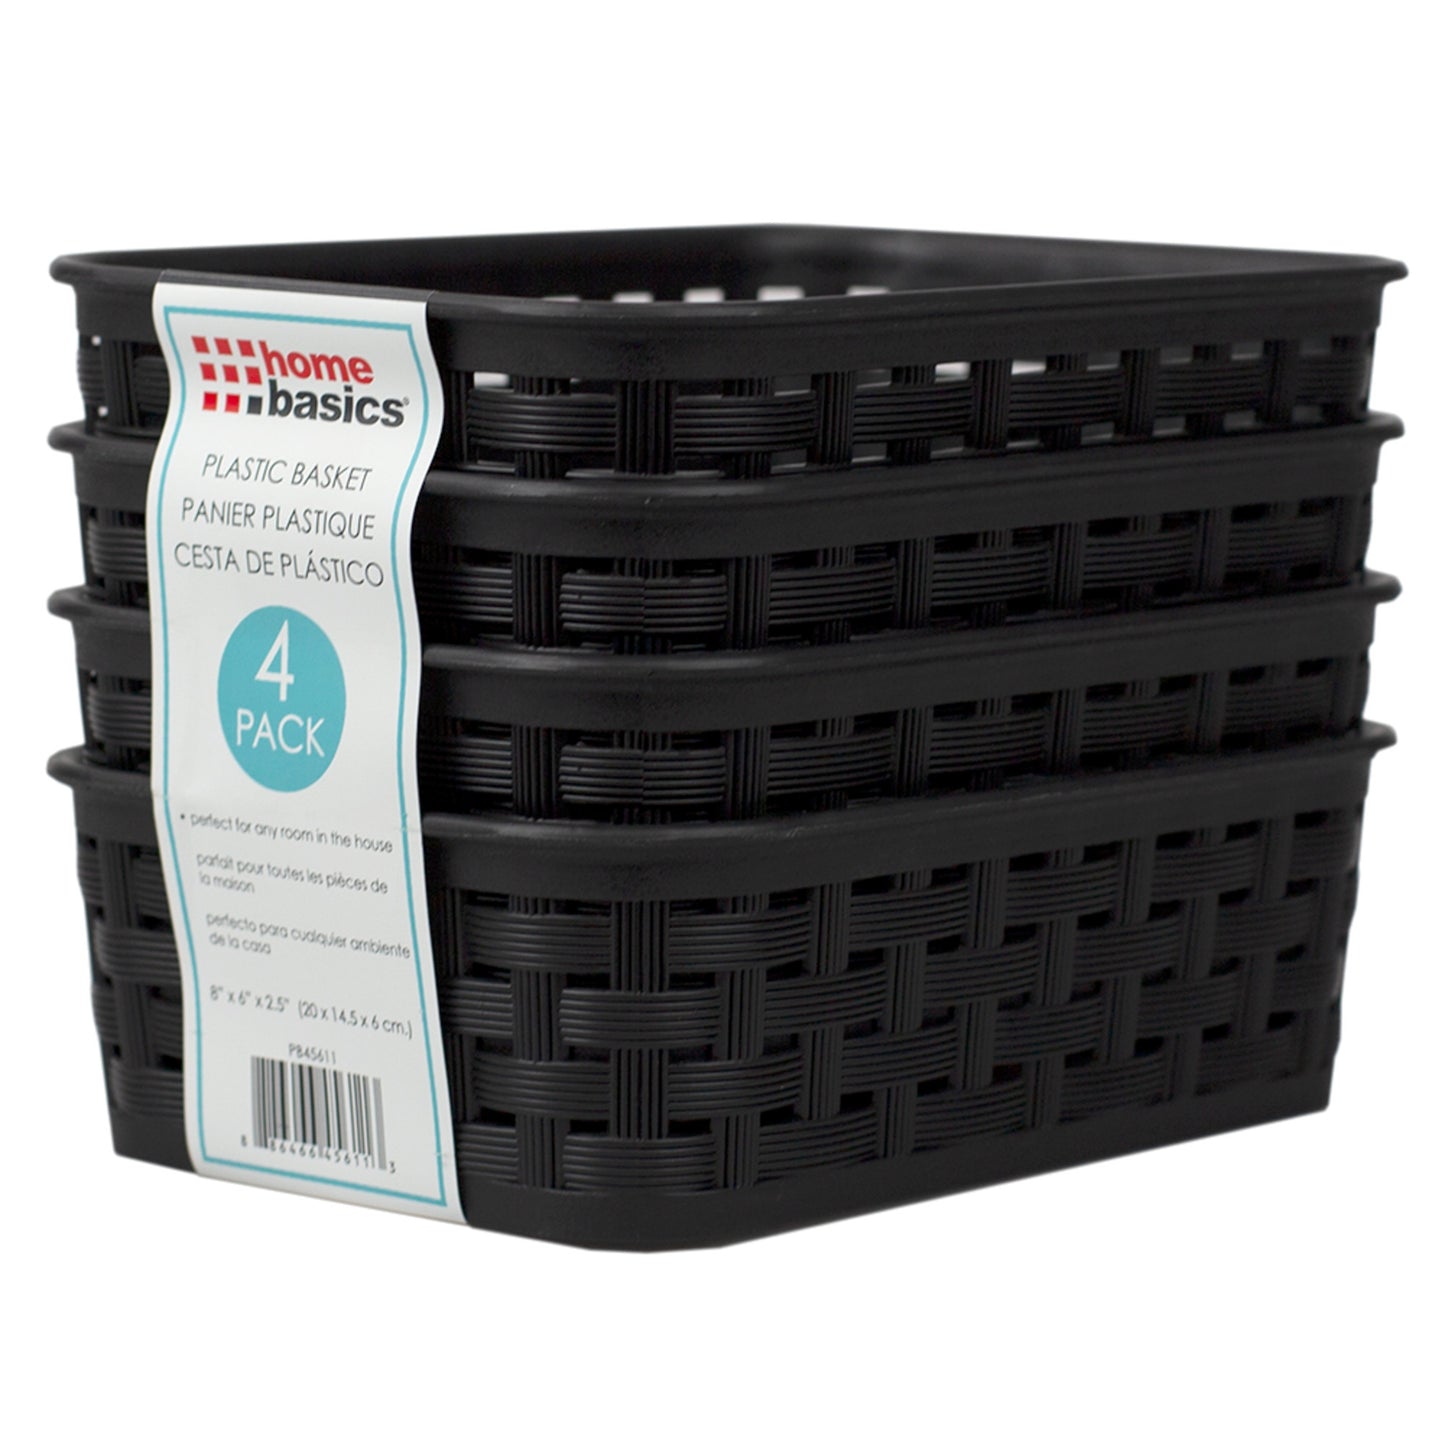 Home Basics Crossweave 7.75"" x 5.25"" x 2.5"" Multi-Purpose Stackable Plastic Storage Basket, (Pack of 4), Black - Black